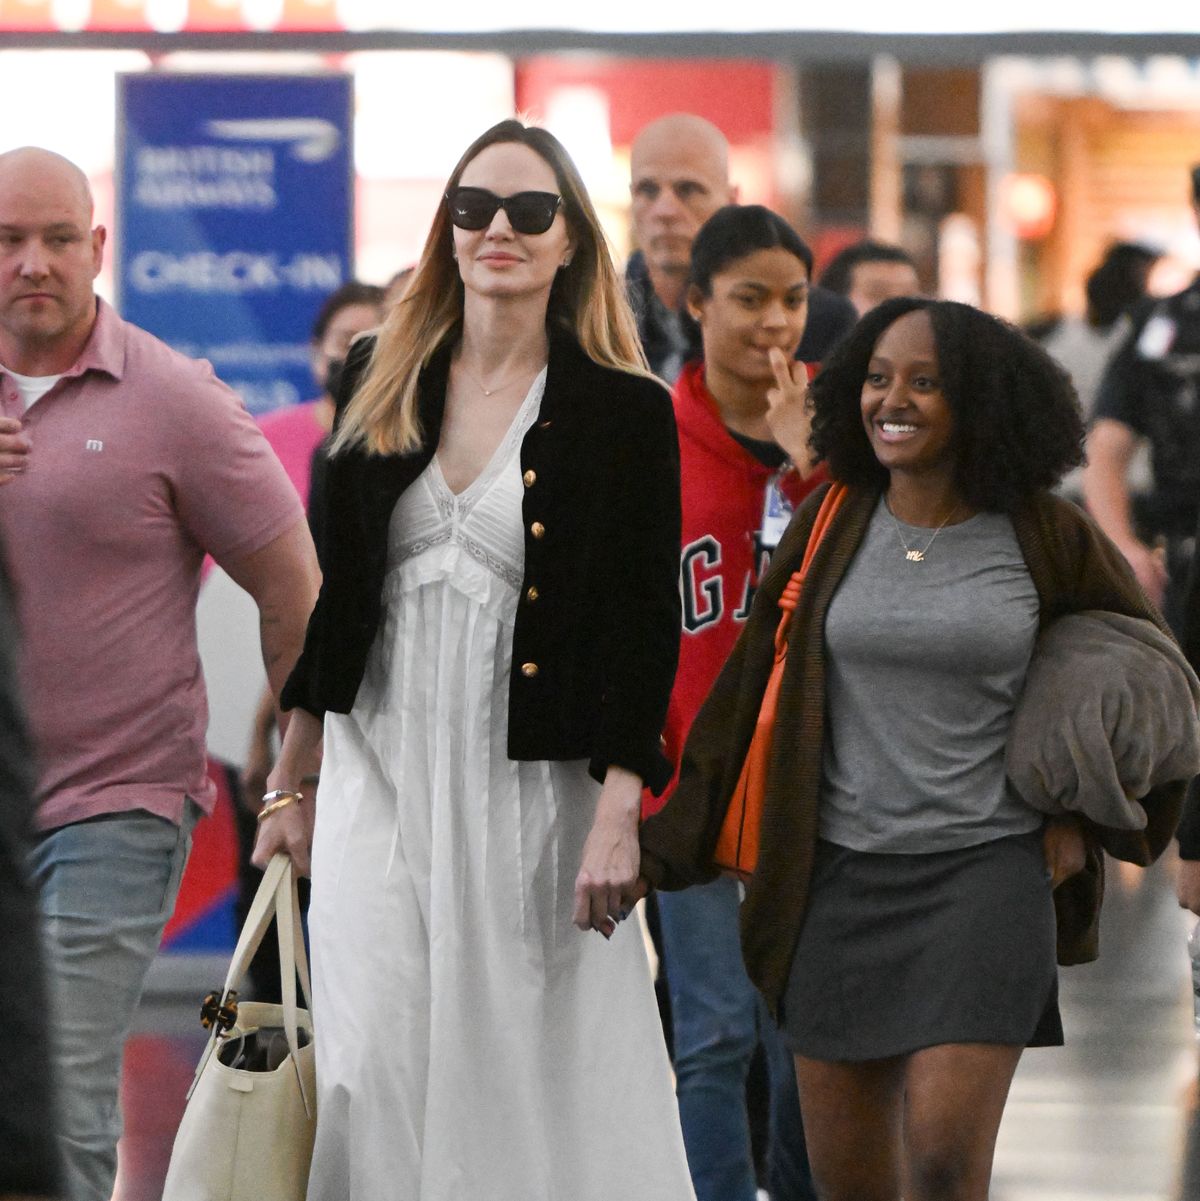 Angelina Jolie's Monochromatic Airport Look Emphasizes Style & Comfort